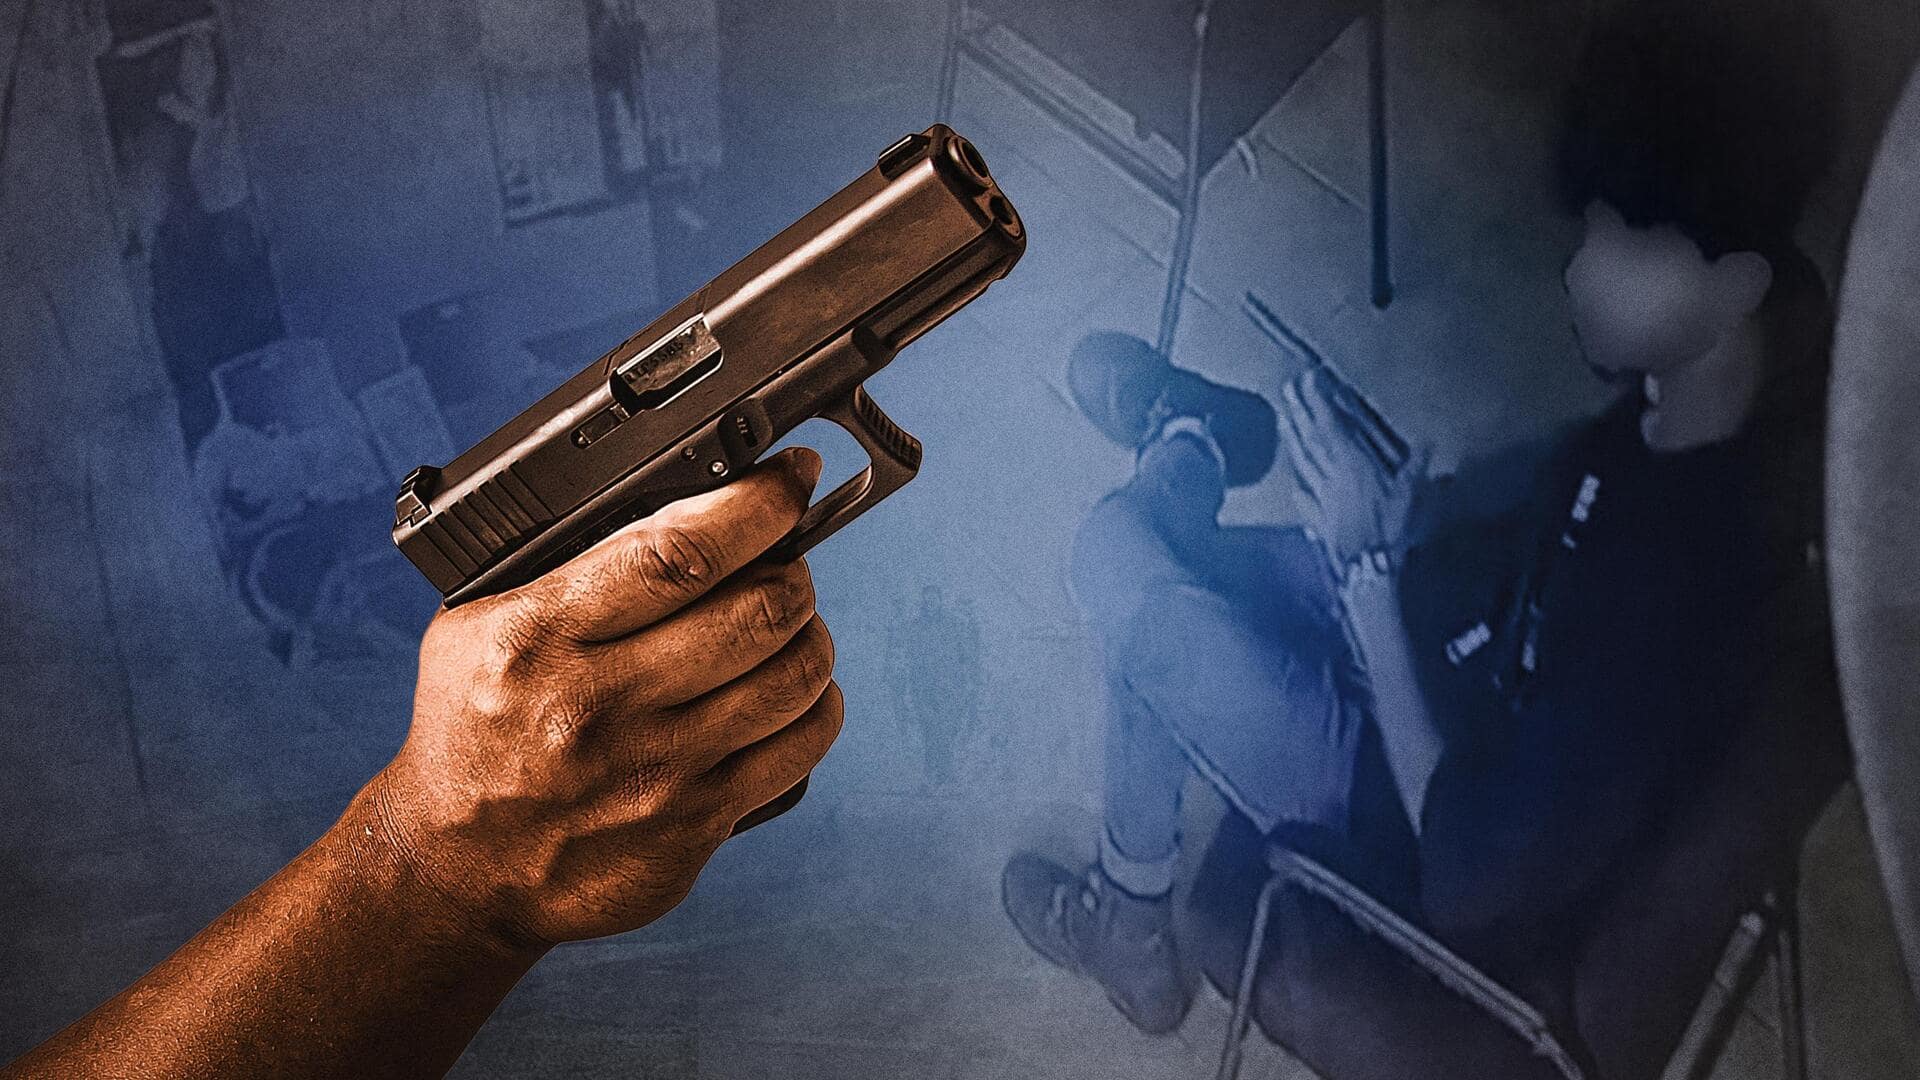 Kerala: Former student opens fire using air pistol in school